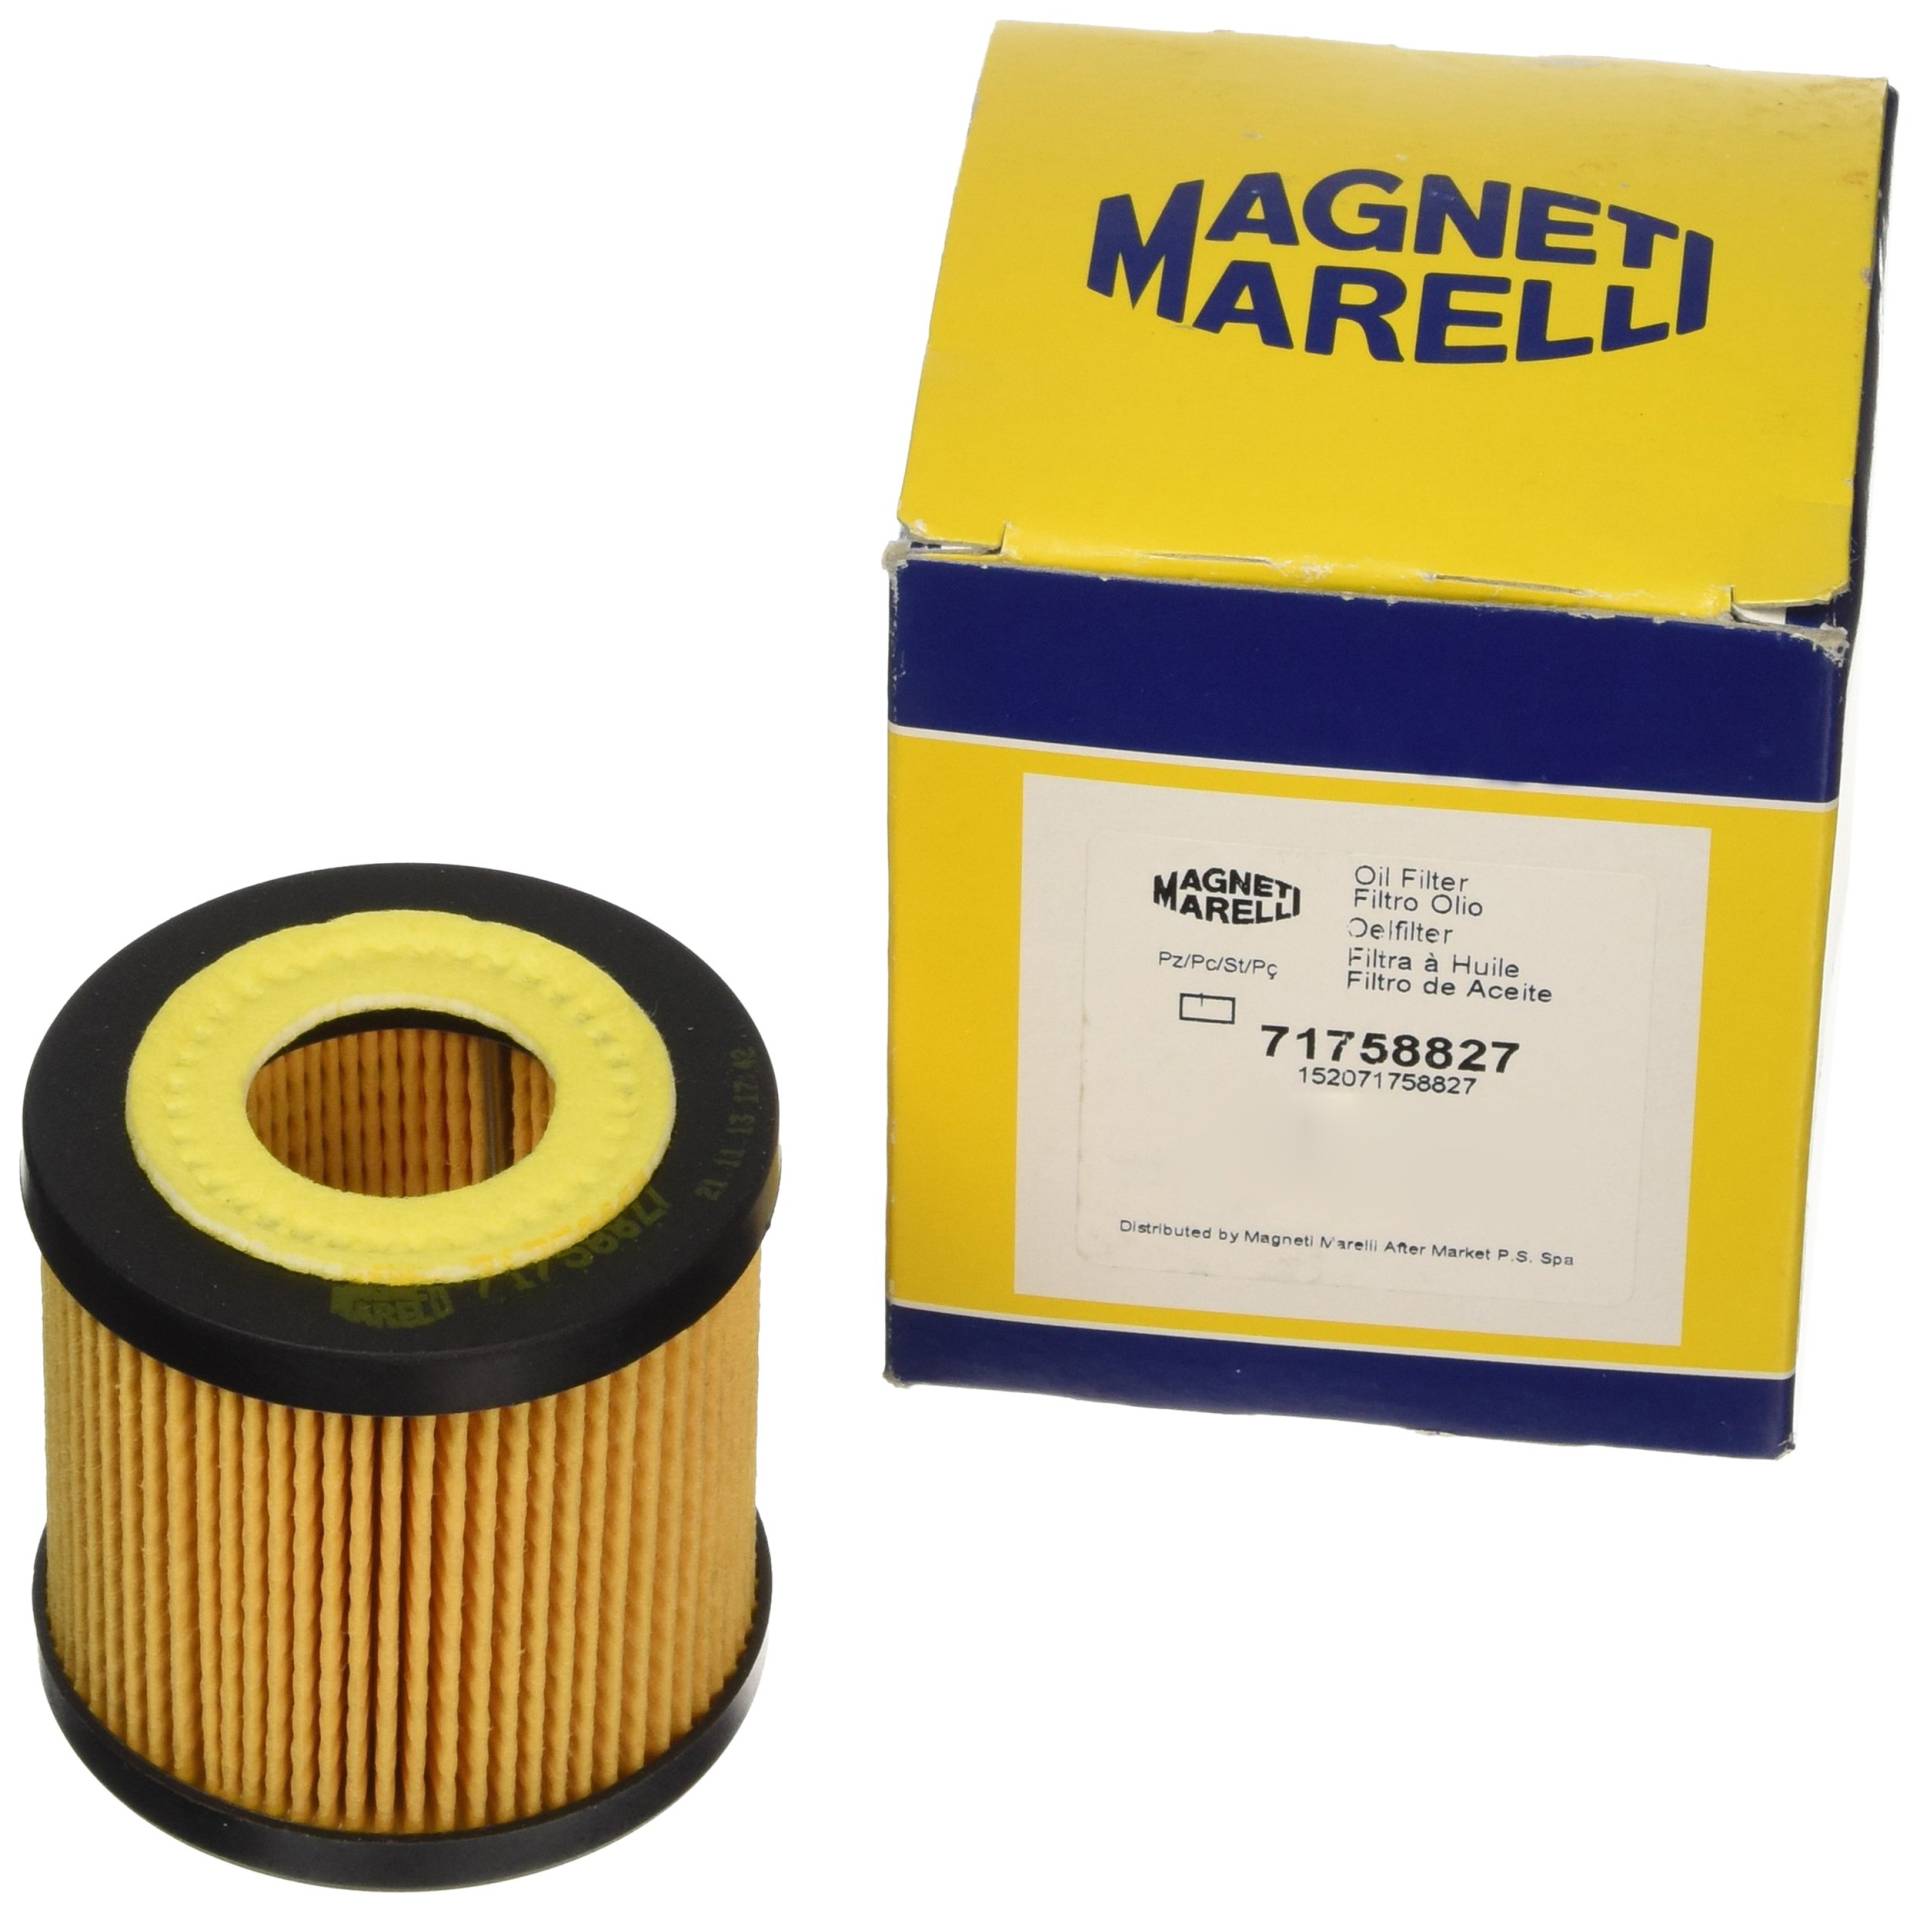 Magneti Marelli 152071758827 Ölfilter von Magneti Marelli